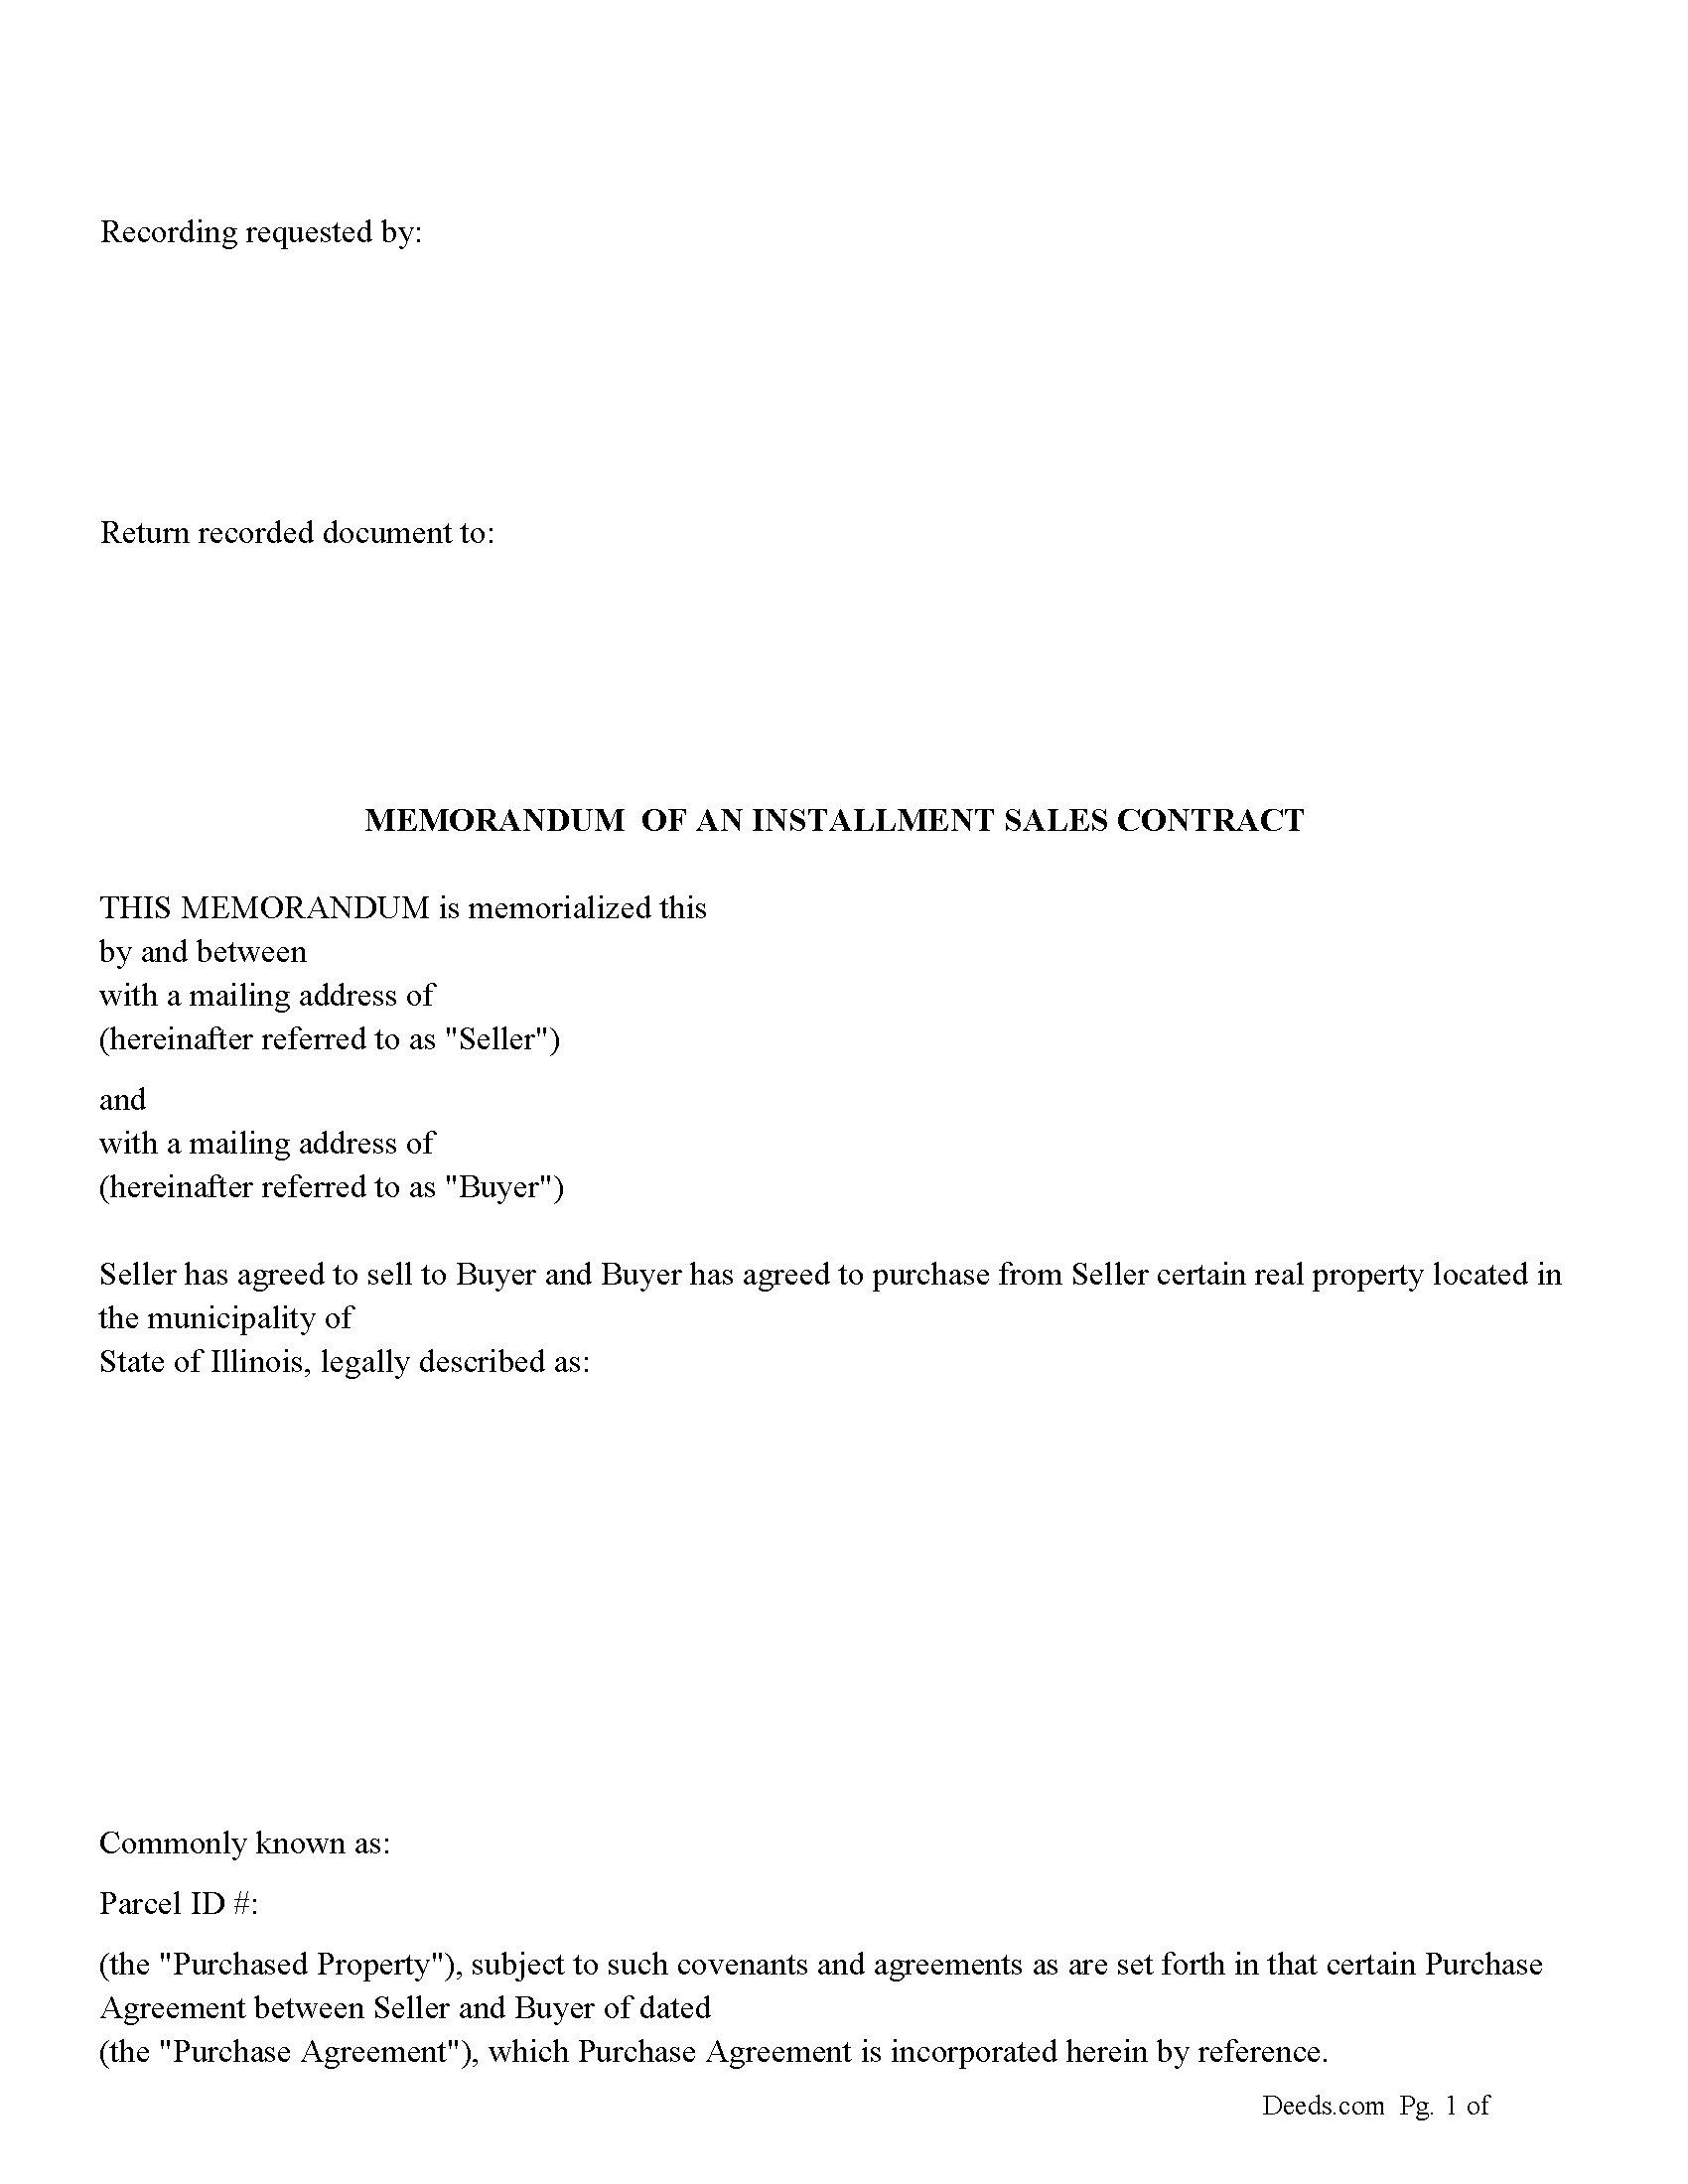 Montgomery County Memorandum of an Installment Sales Contract Form